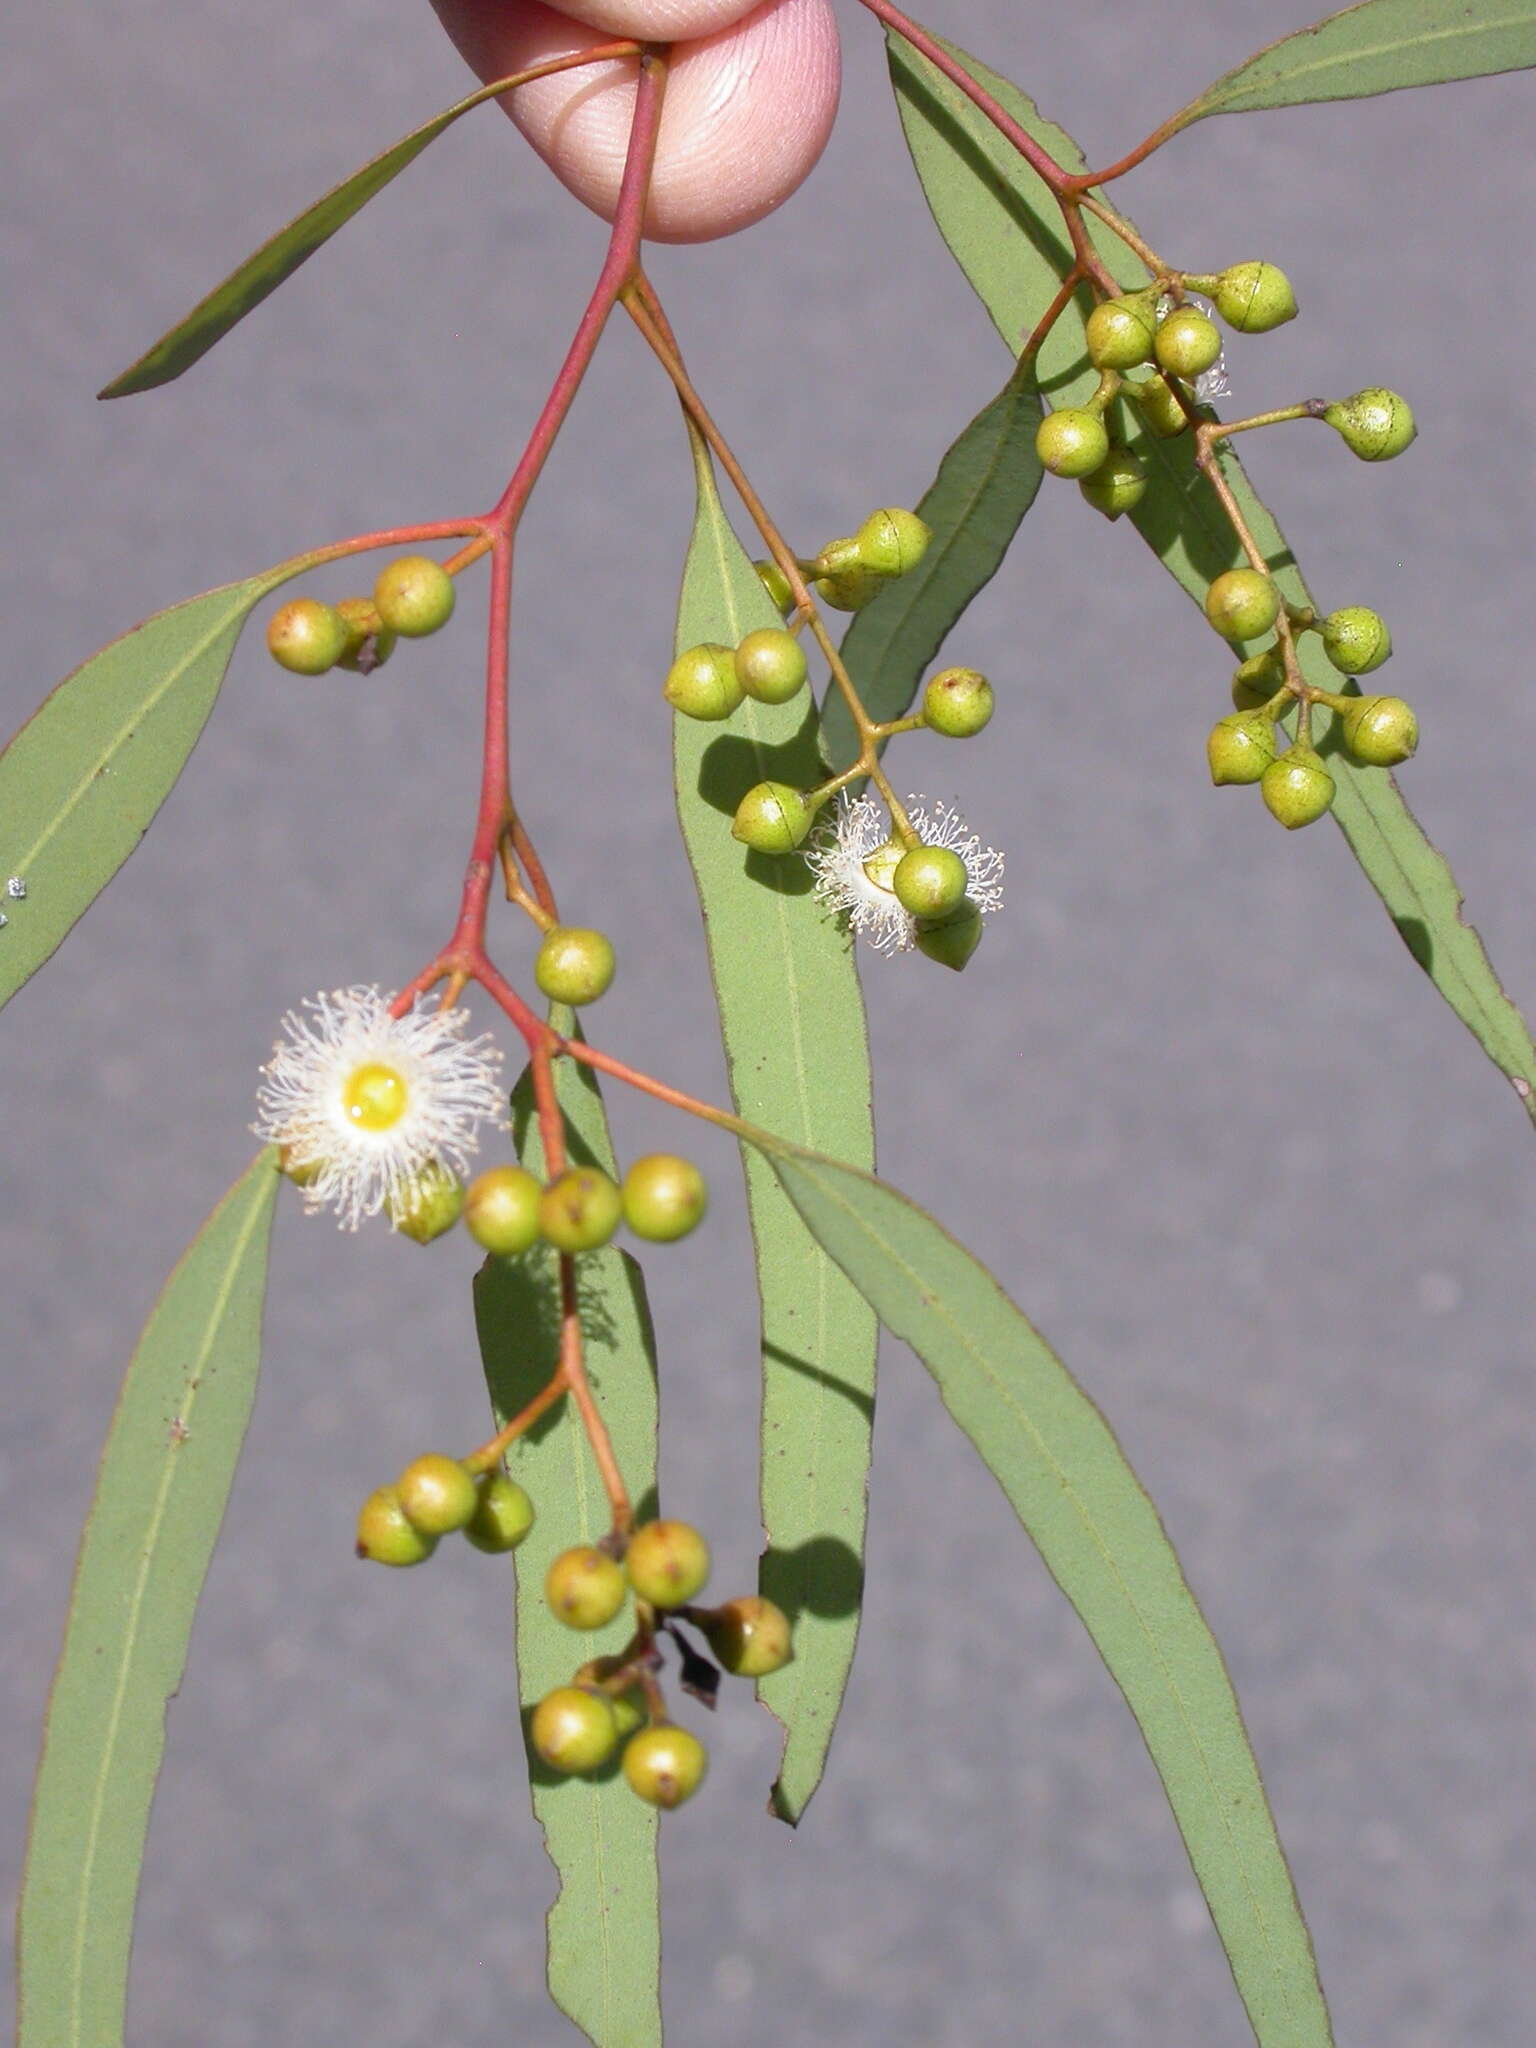 Image of Eucalyptus cullenii Cambage